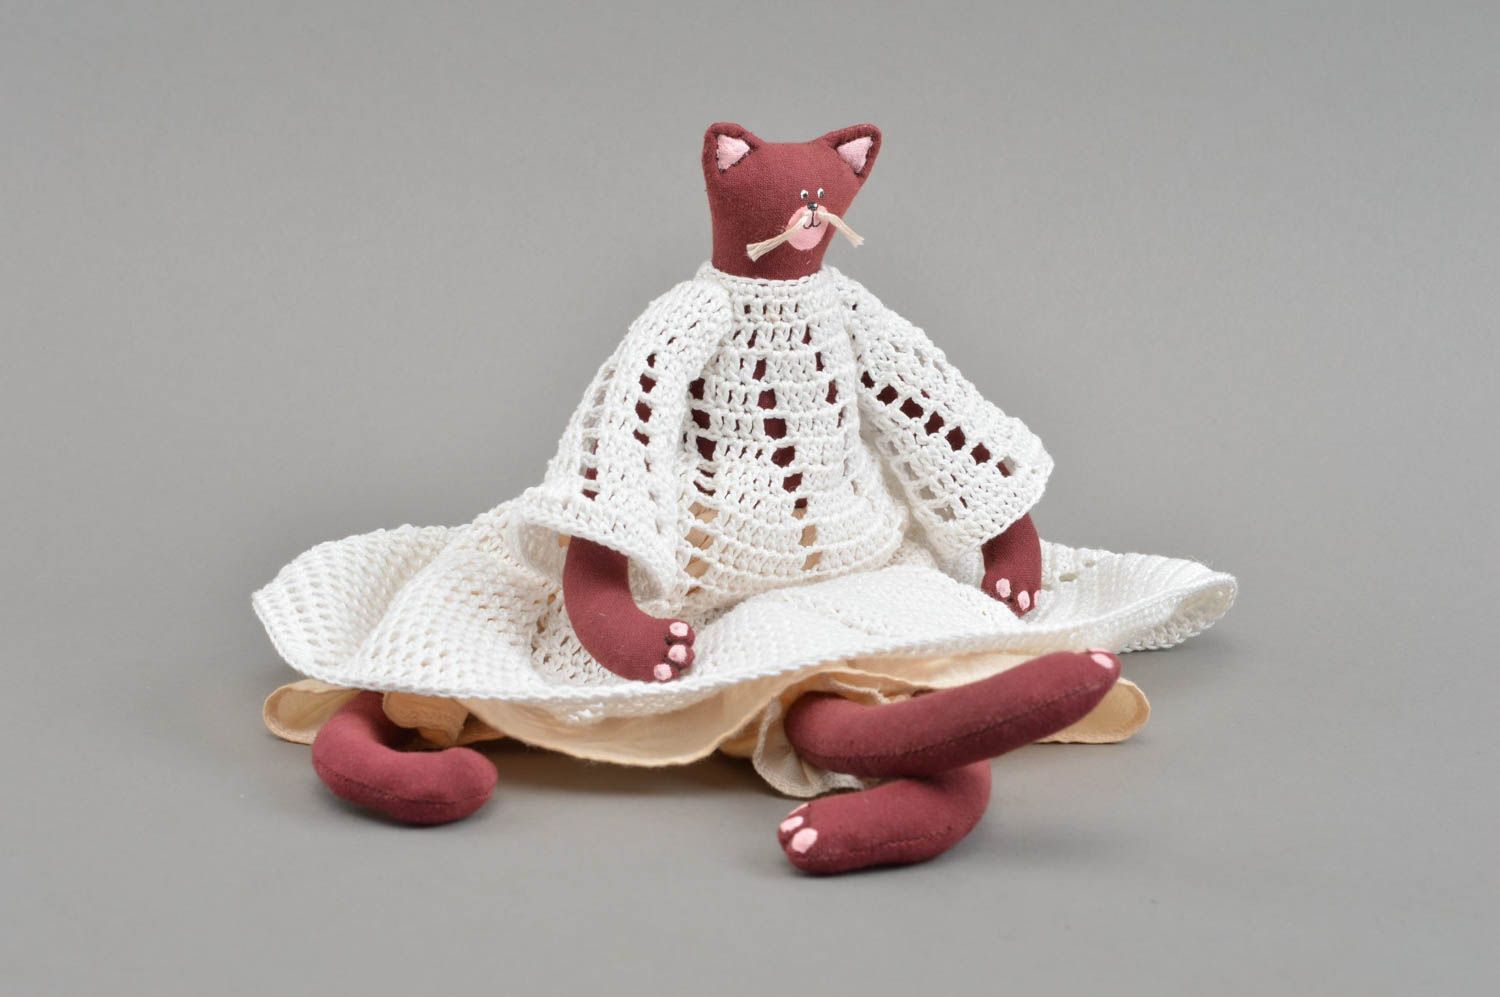 Fabric toy cat in dress designer stuffed toy handmade nursery decor ideas photo 4